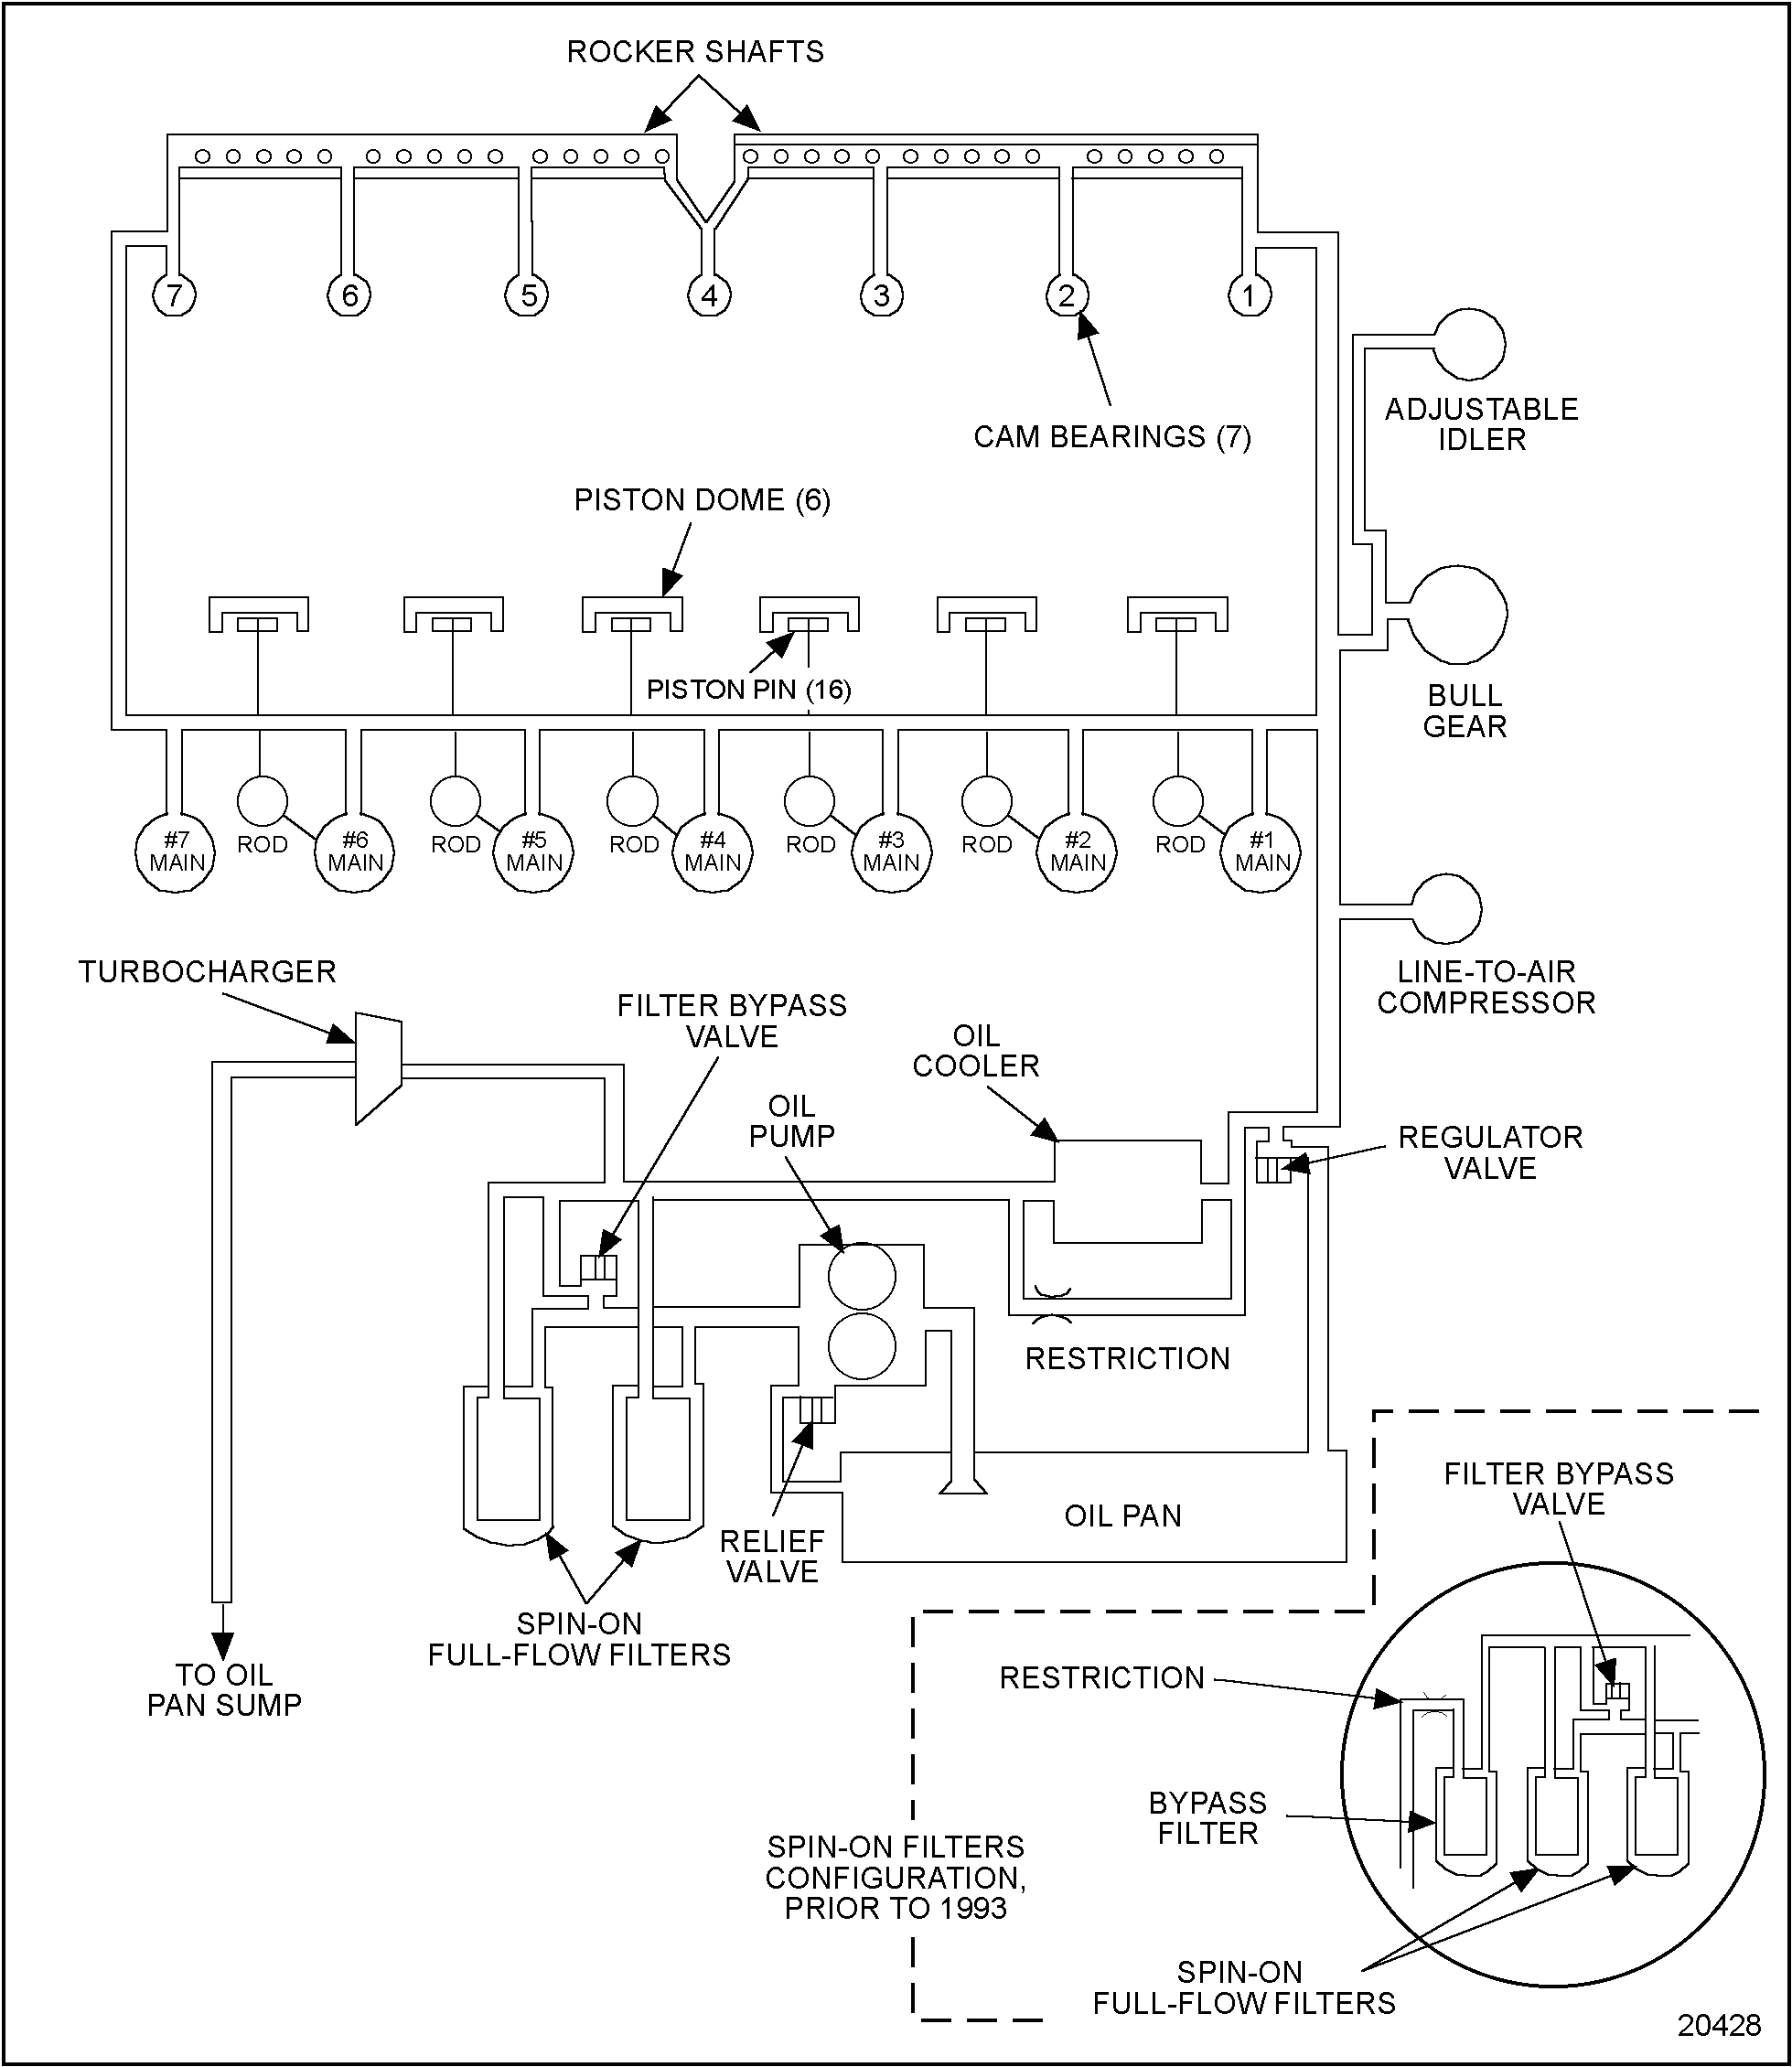 detroit sel series 60 ecm wiring diagram